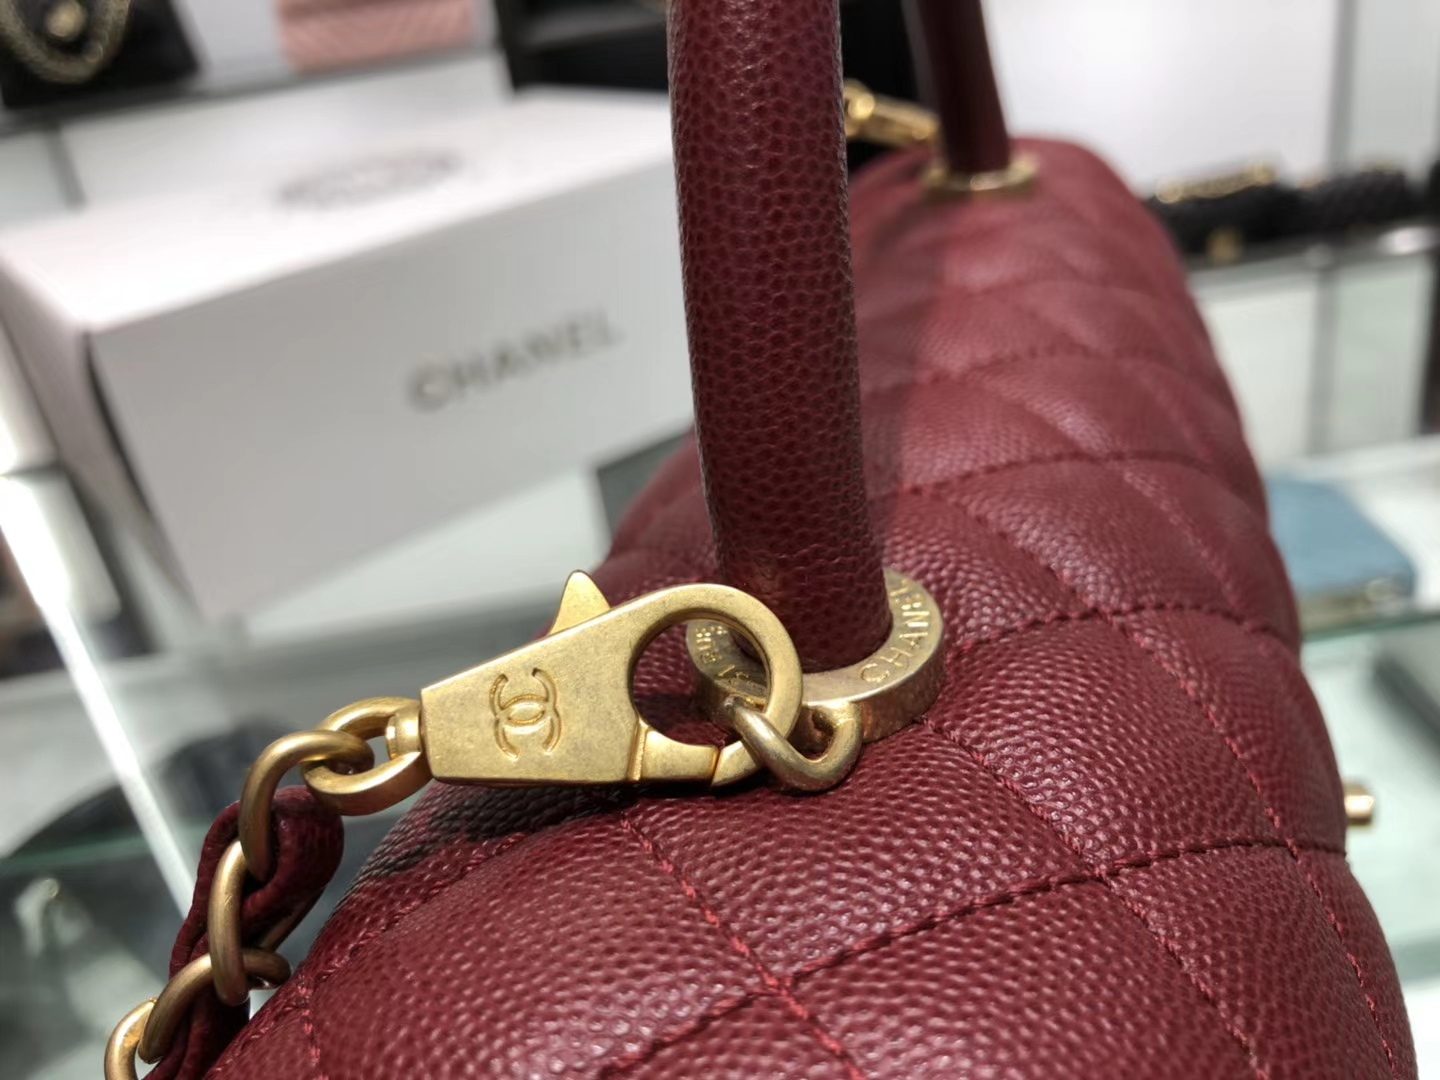 Chanel（香奈儿）coco handle # 中号 菱格包 枣红色 金扣 29cm